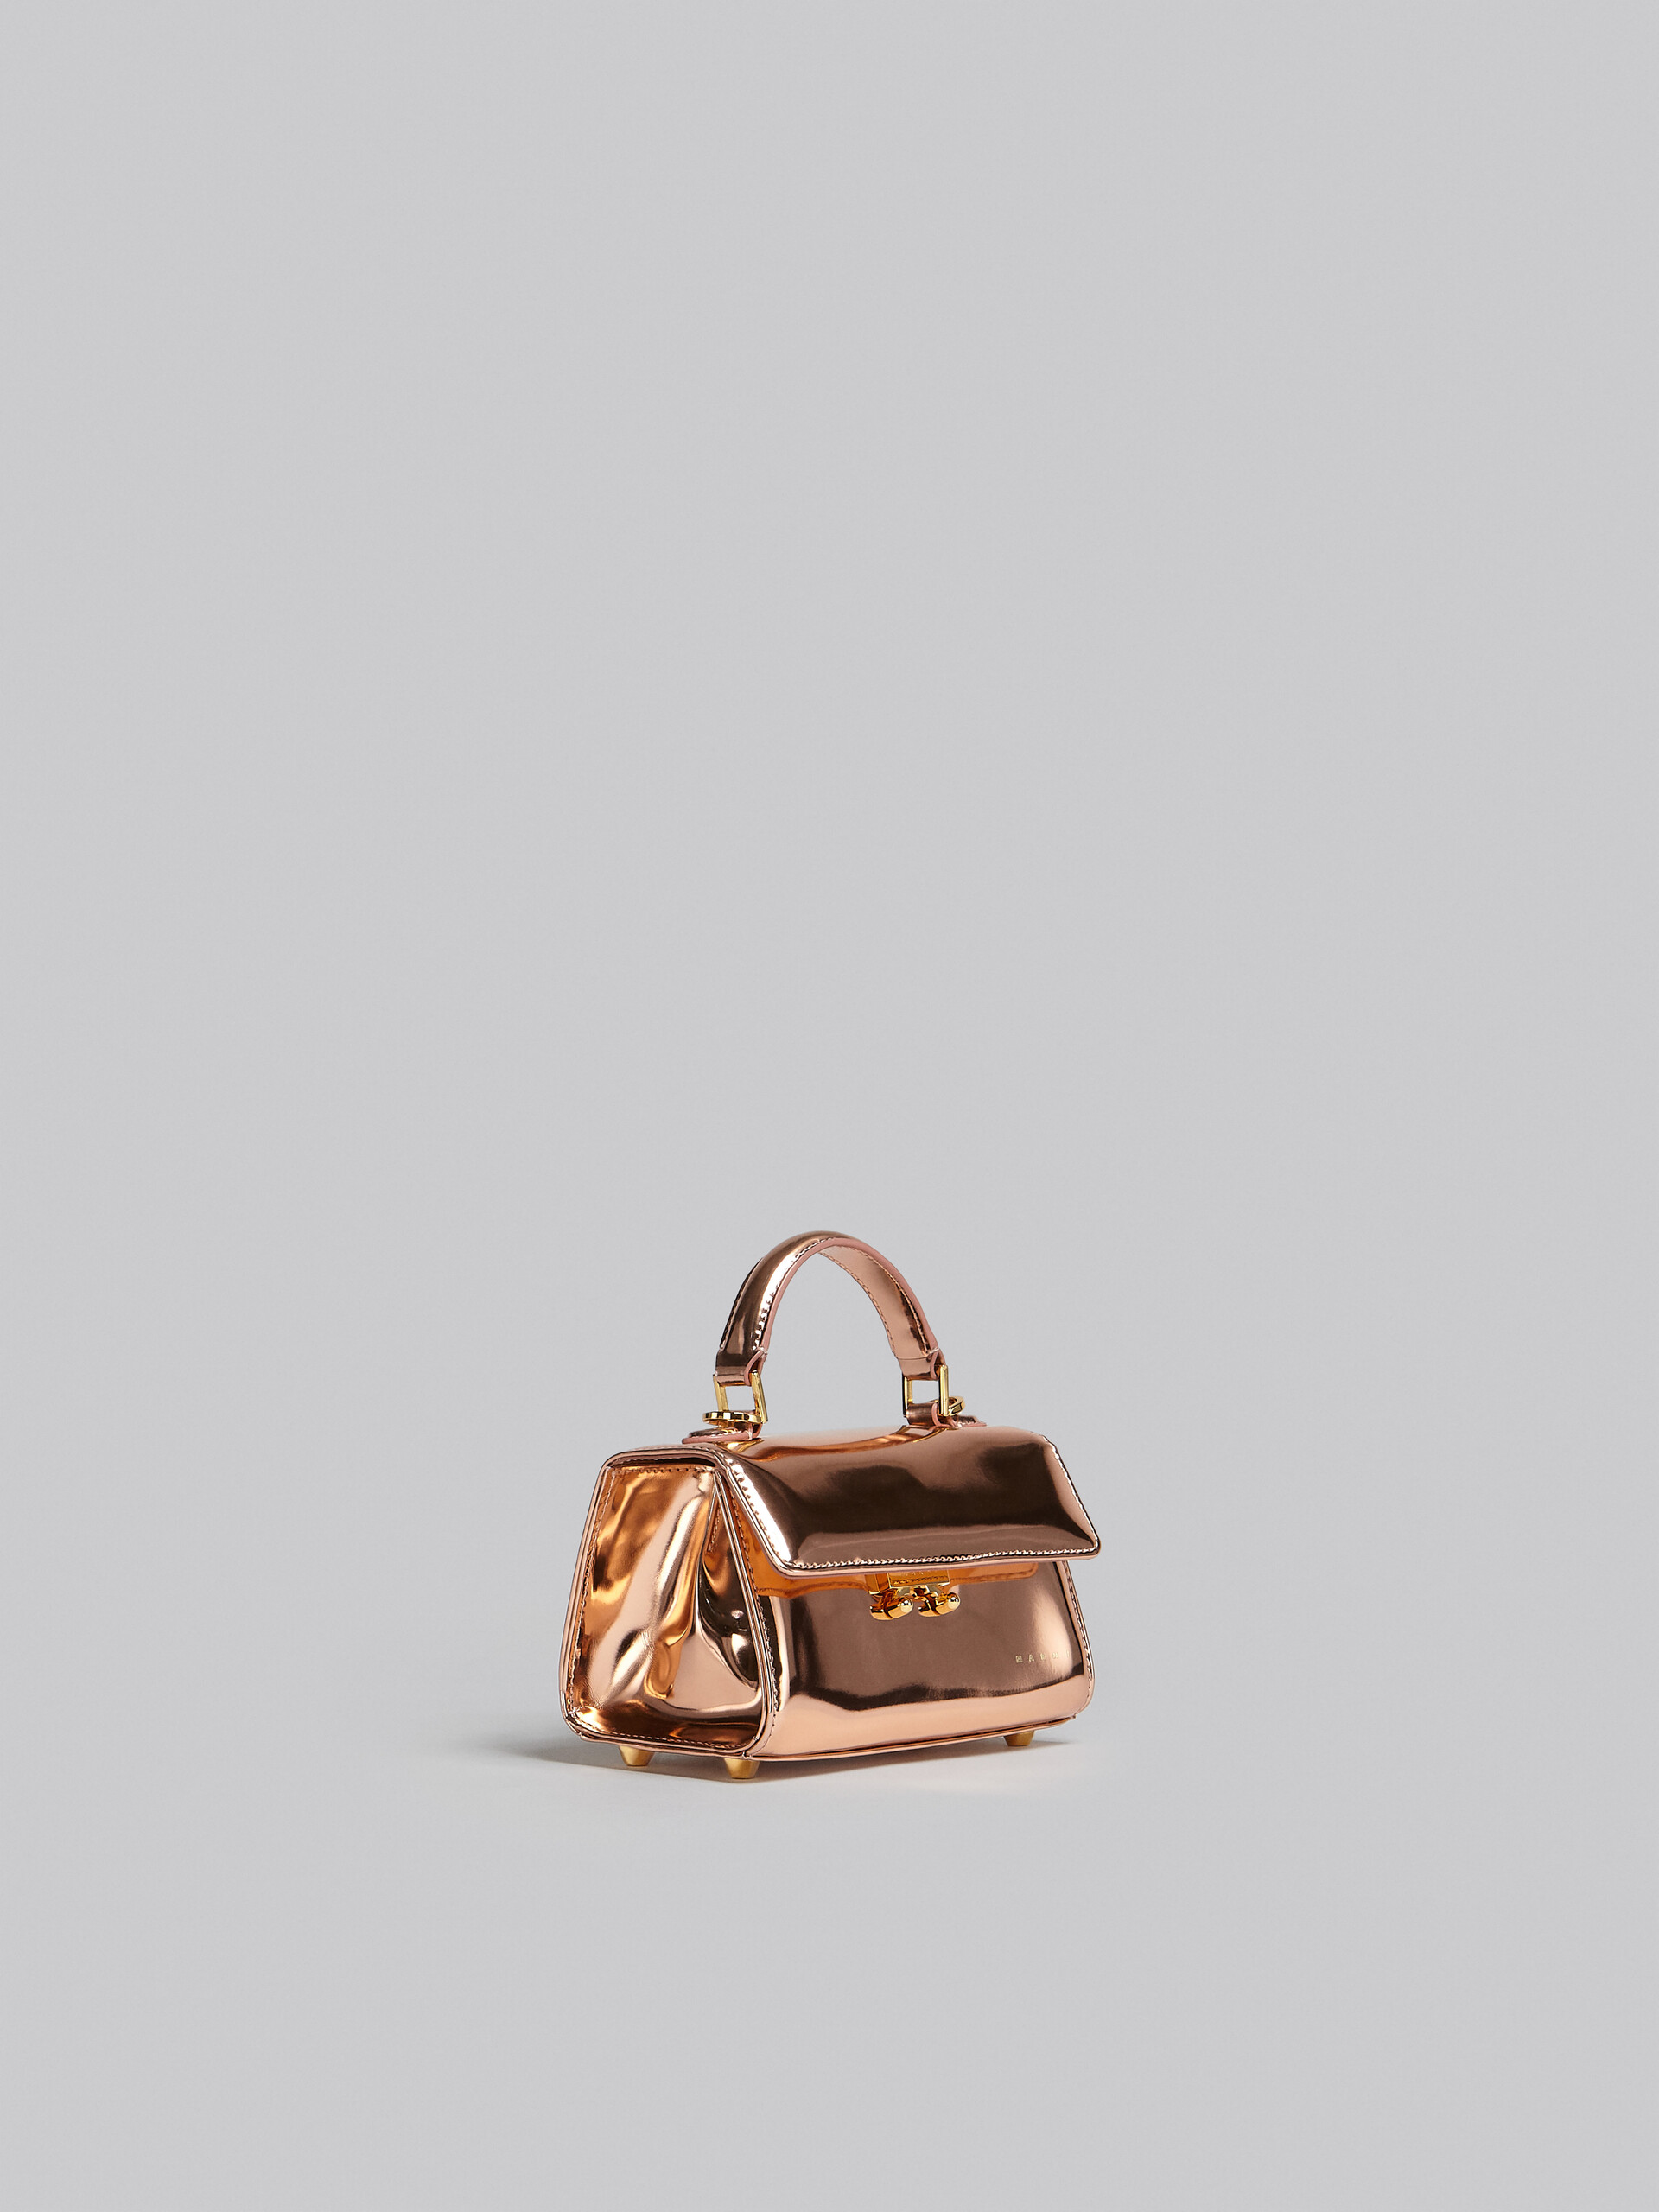 Relativity Mini Bag in rose gold mirrored leather - Handbags - Image 6